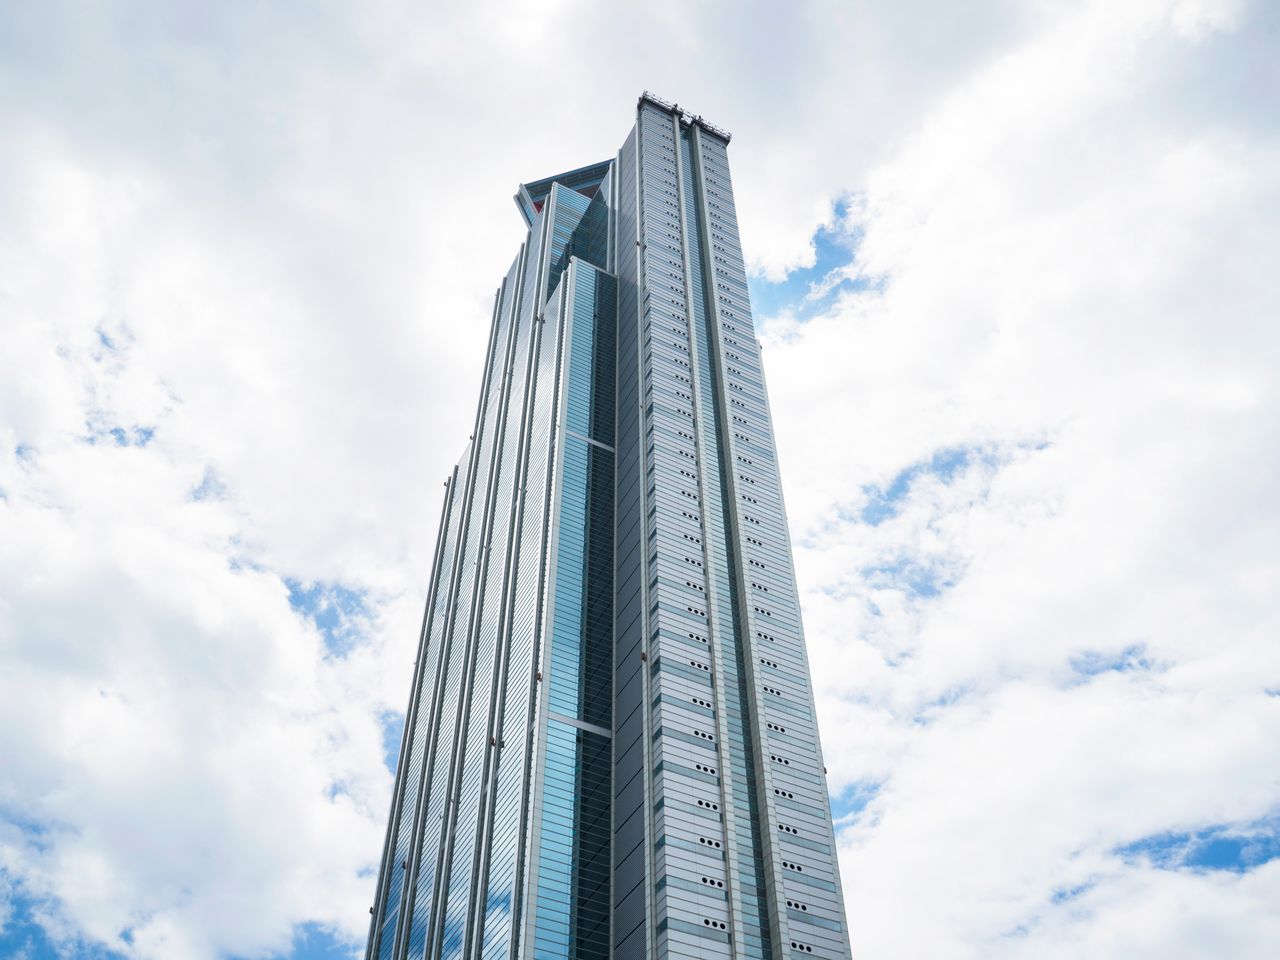 “Nish”目前的地标建筑，是大阪府咲洲办公楼“cosmo tower”